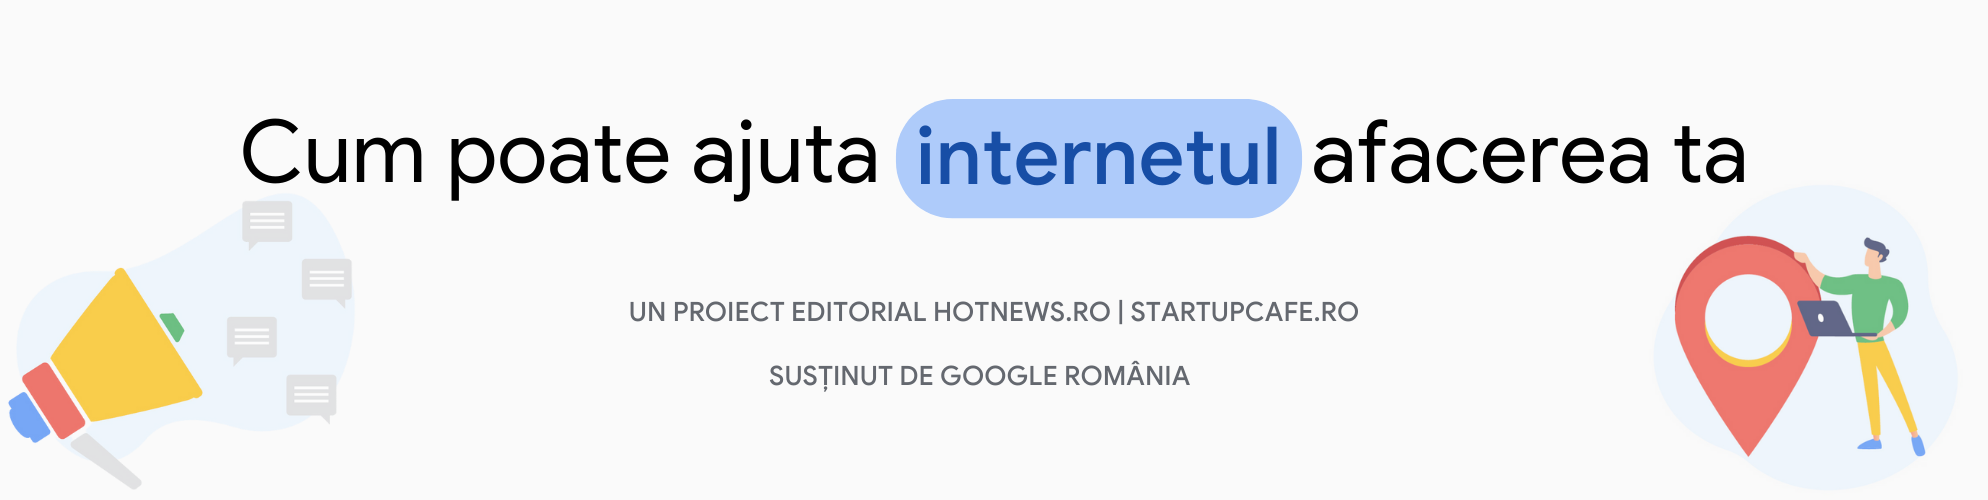 Miniseria Video Cum poate ajuta internetul afacerea ta powered by Google Romania.png